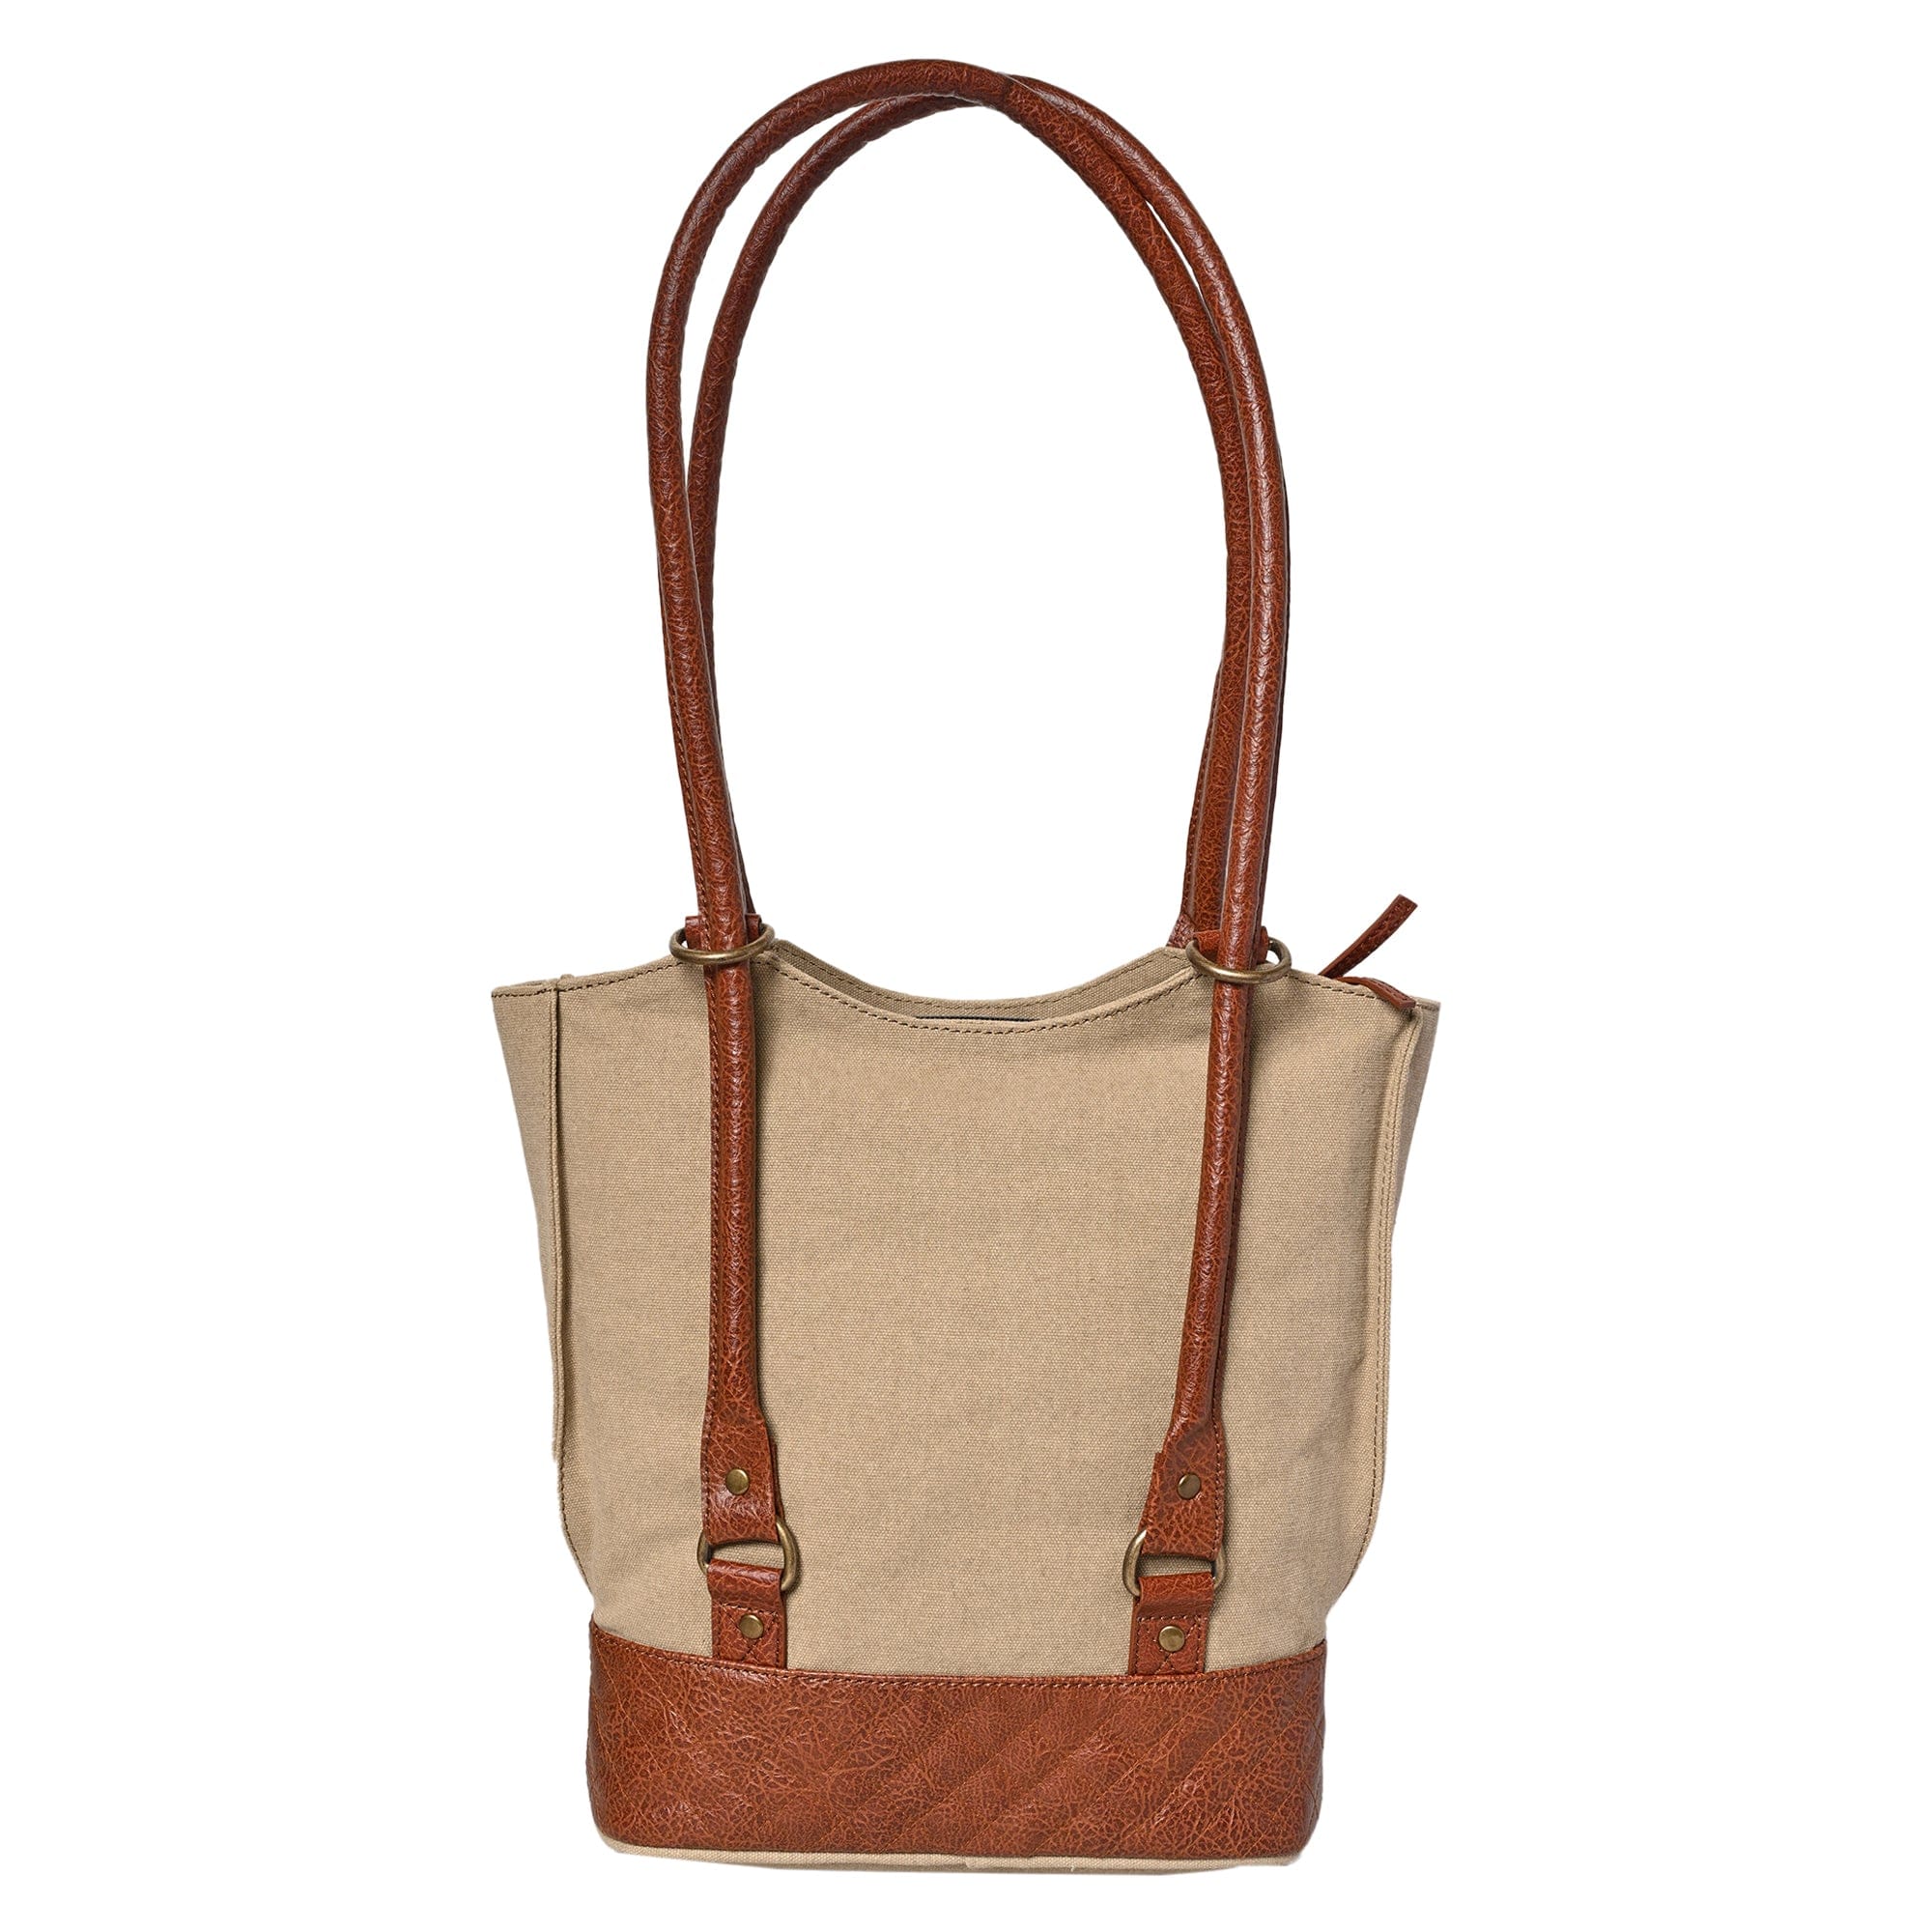 Mona B Two in One Convertible Tote: Beige - (M-2507) - Handbag/Backpack by Mona-B - 